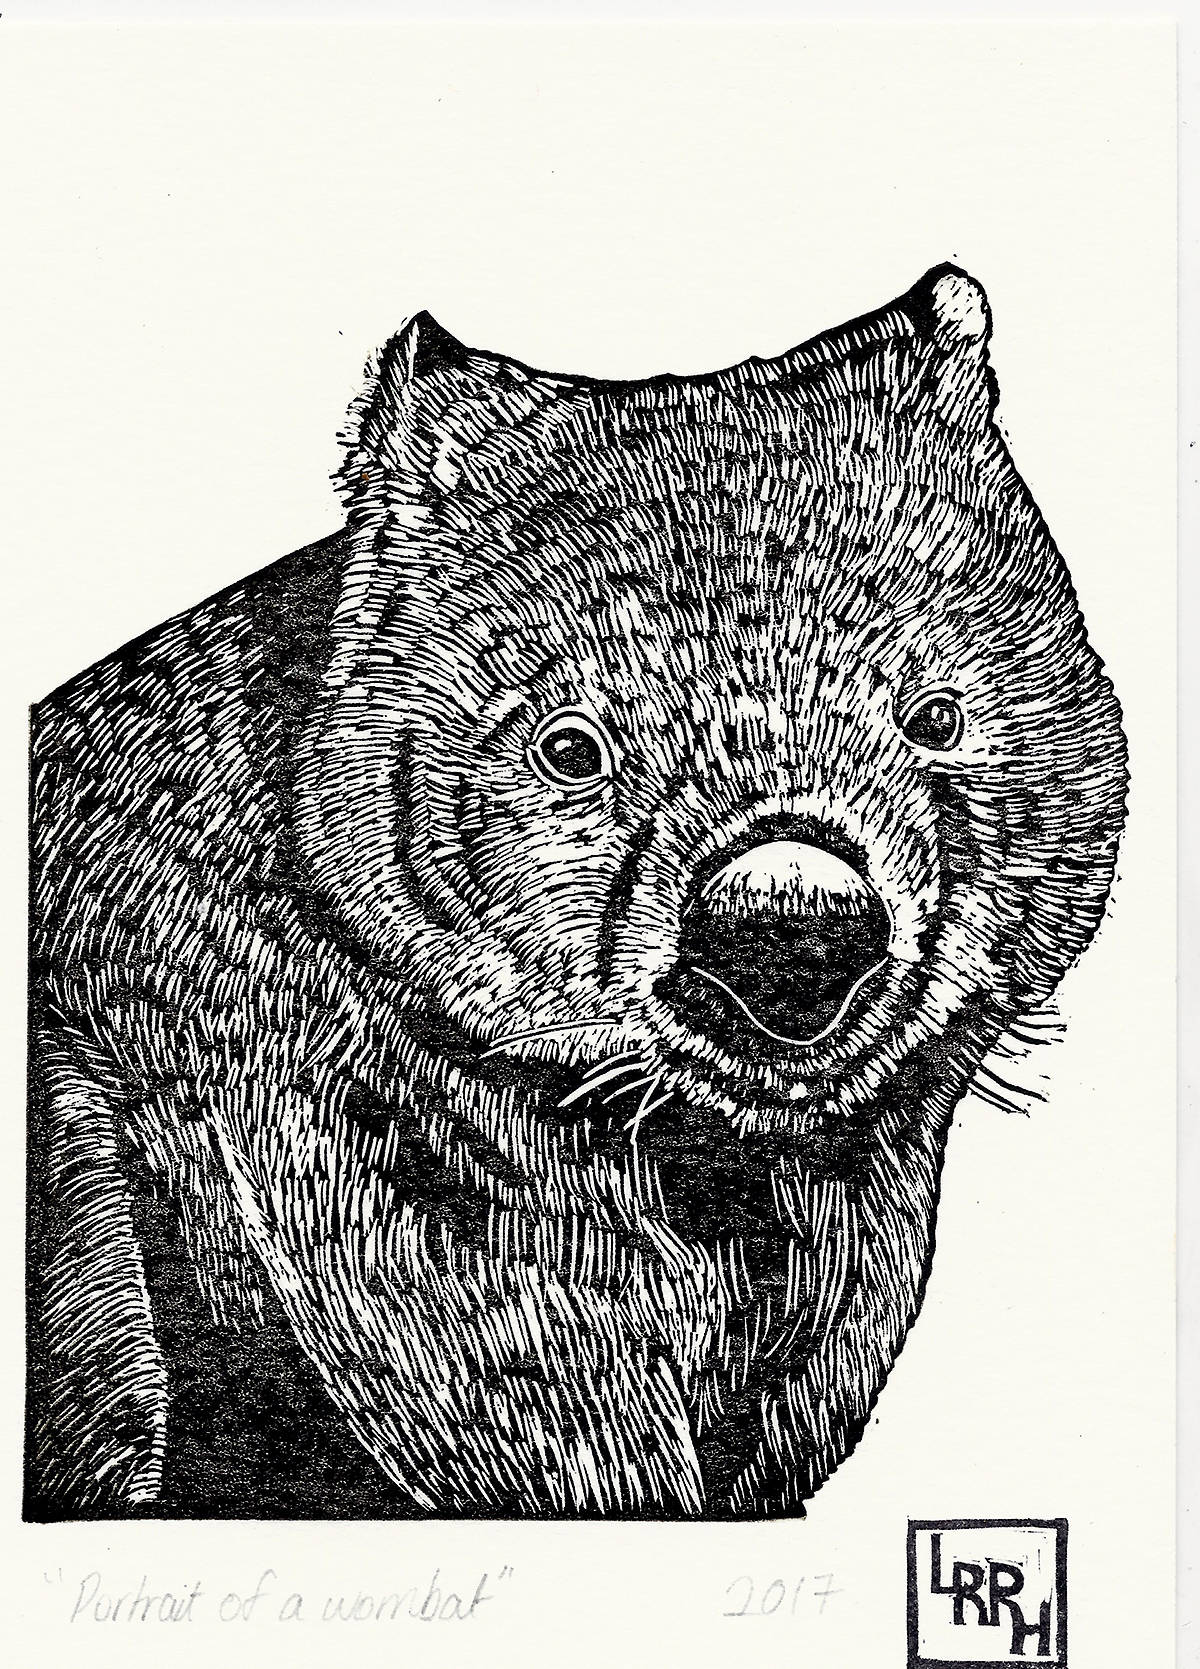 Portrait of a Wombat - Linoprint